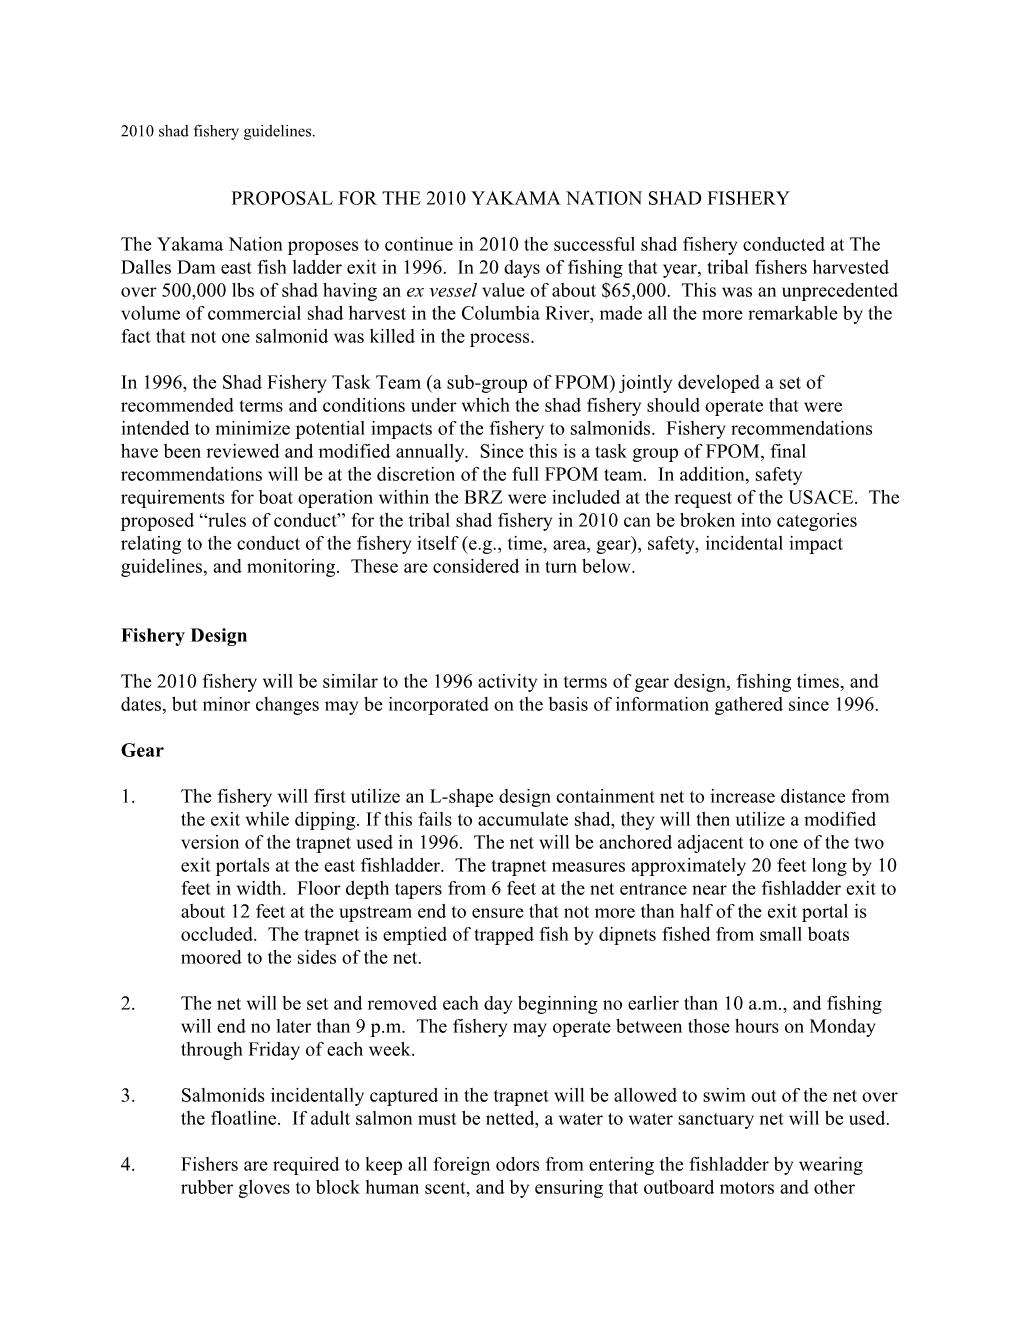 Proposal for the 2007 Yakama Nation Shad Fishery